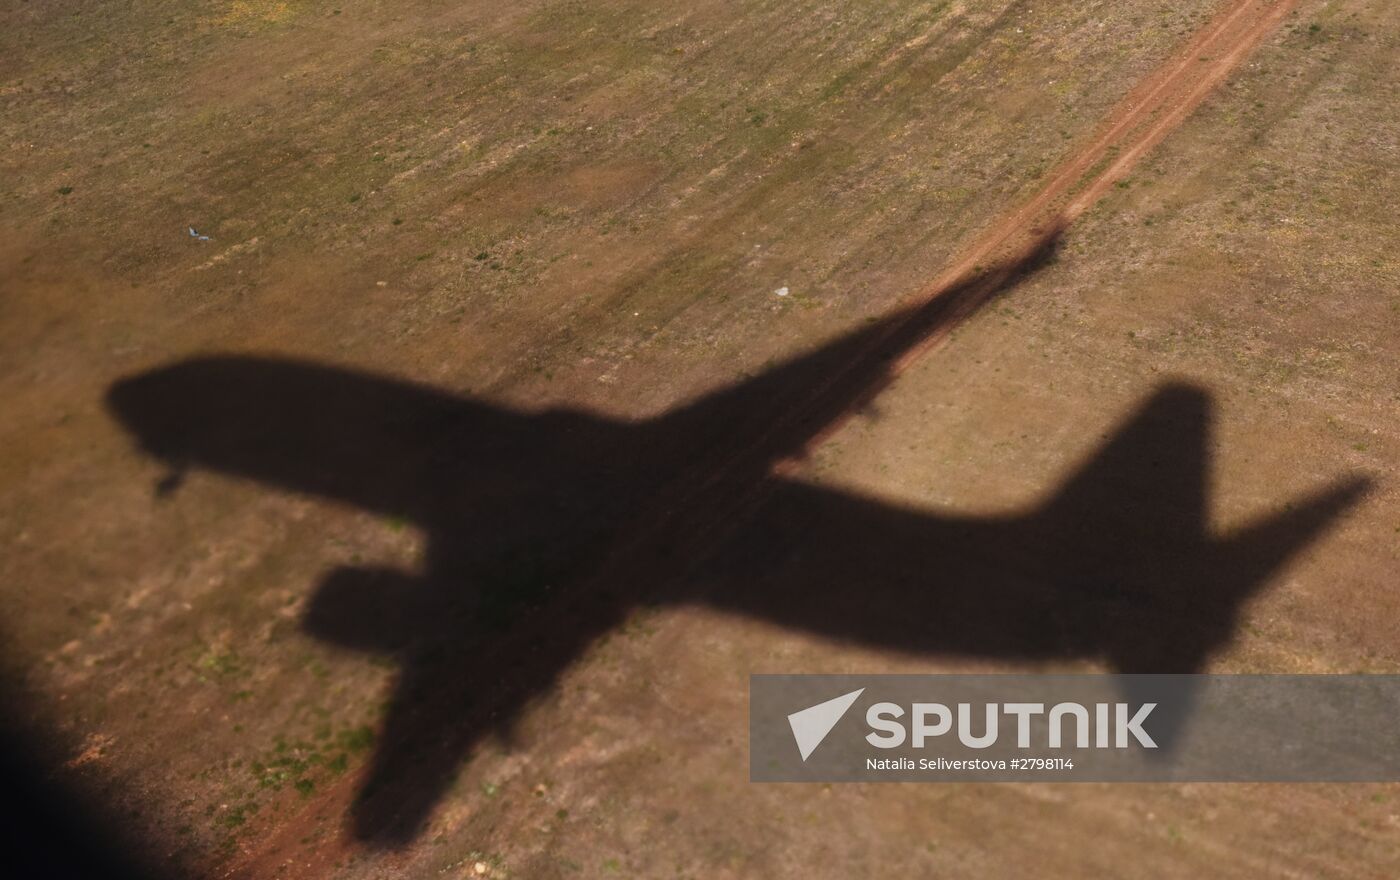 Shadow of flying plane